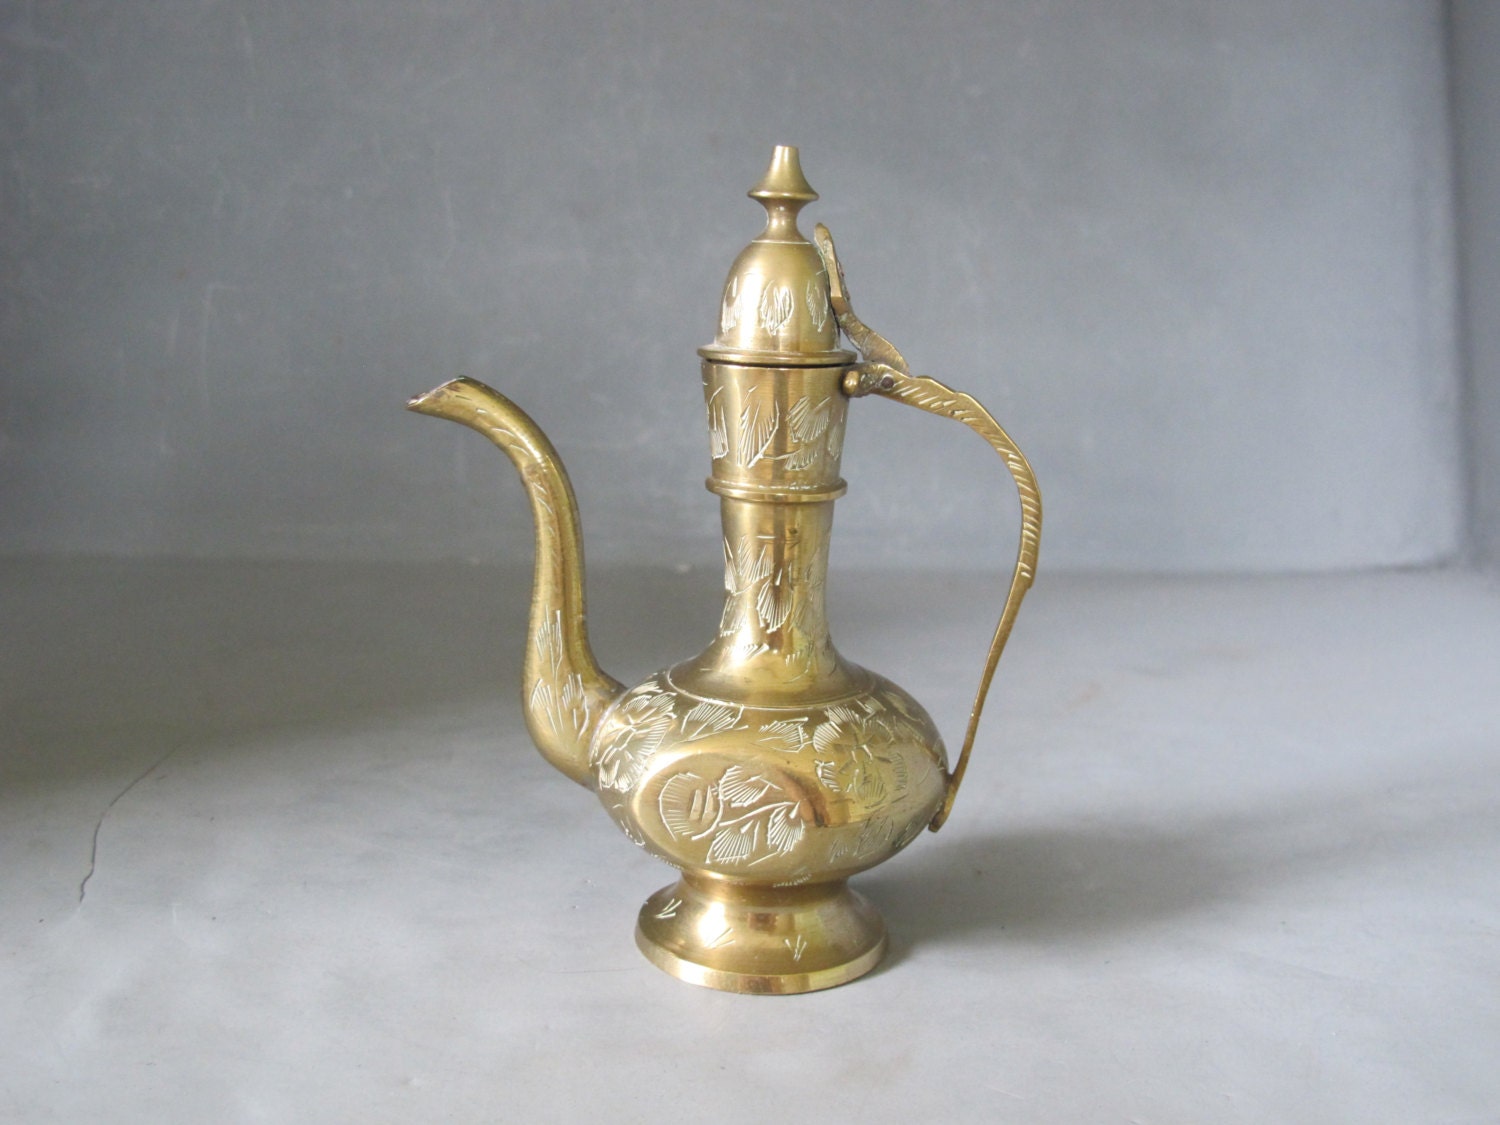 Vintage Miniature Brass Teapot / Moroccan Style by MilkaCervenka